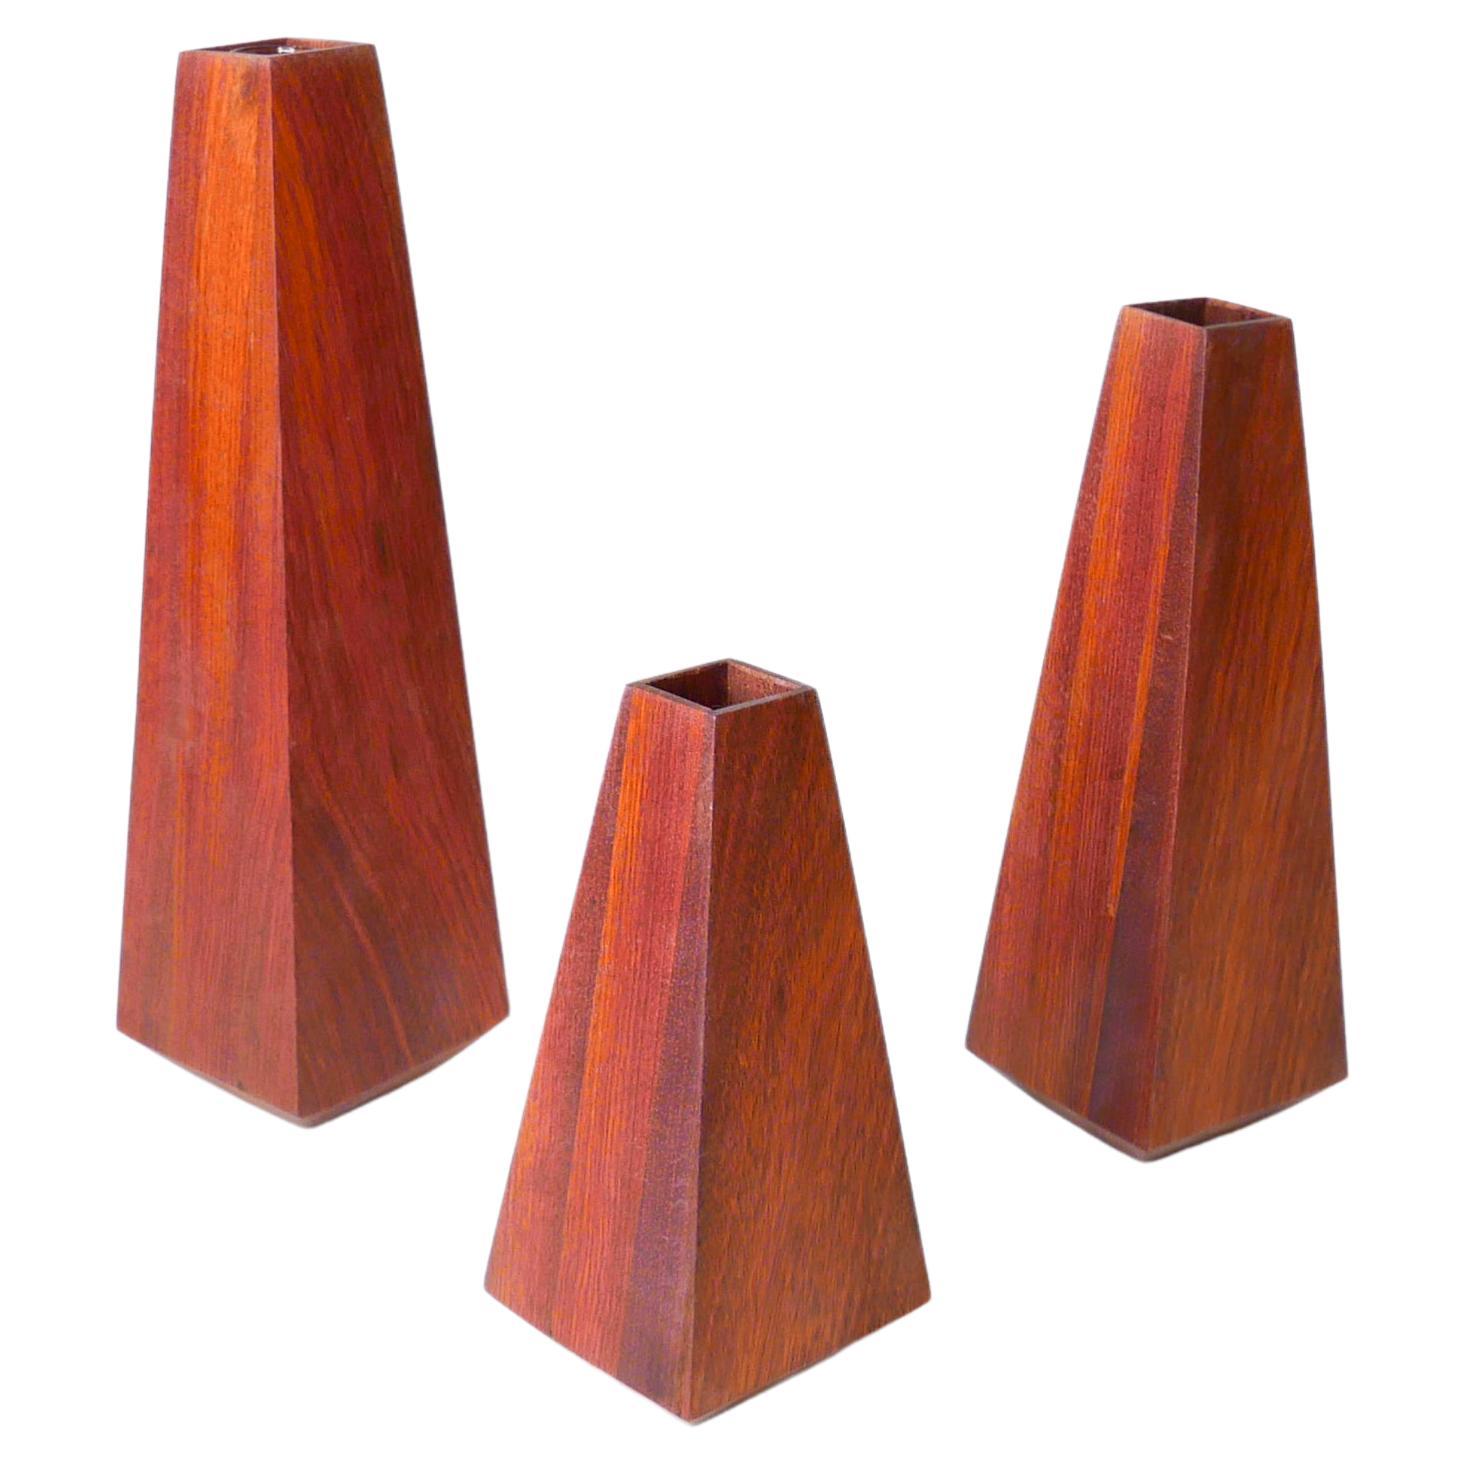 'Picos' Minimalist Set of Wooden Vases in Brazilian Hardwood by Knót Artesanal